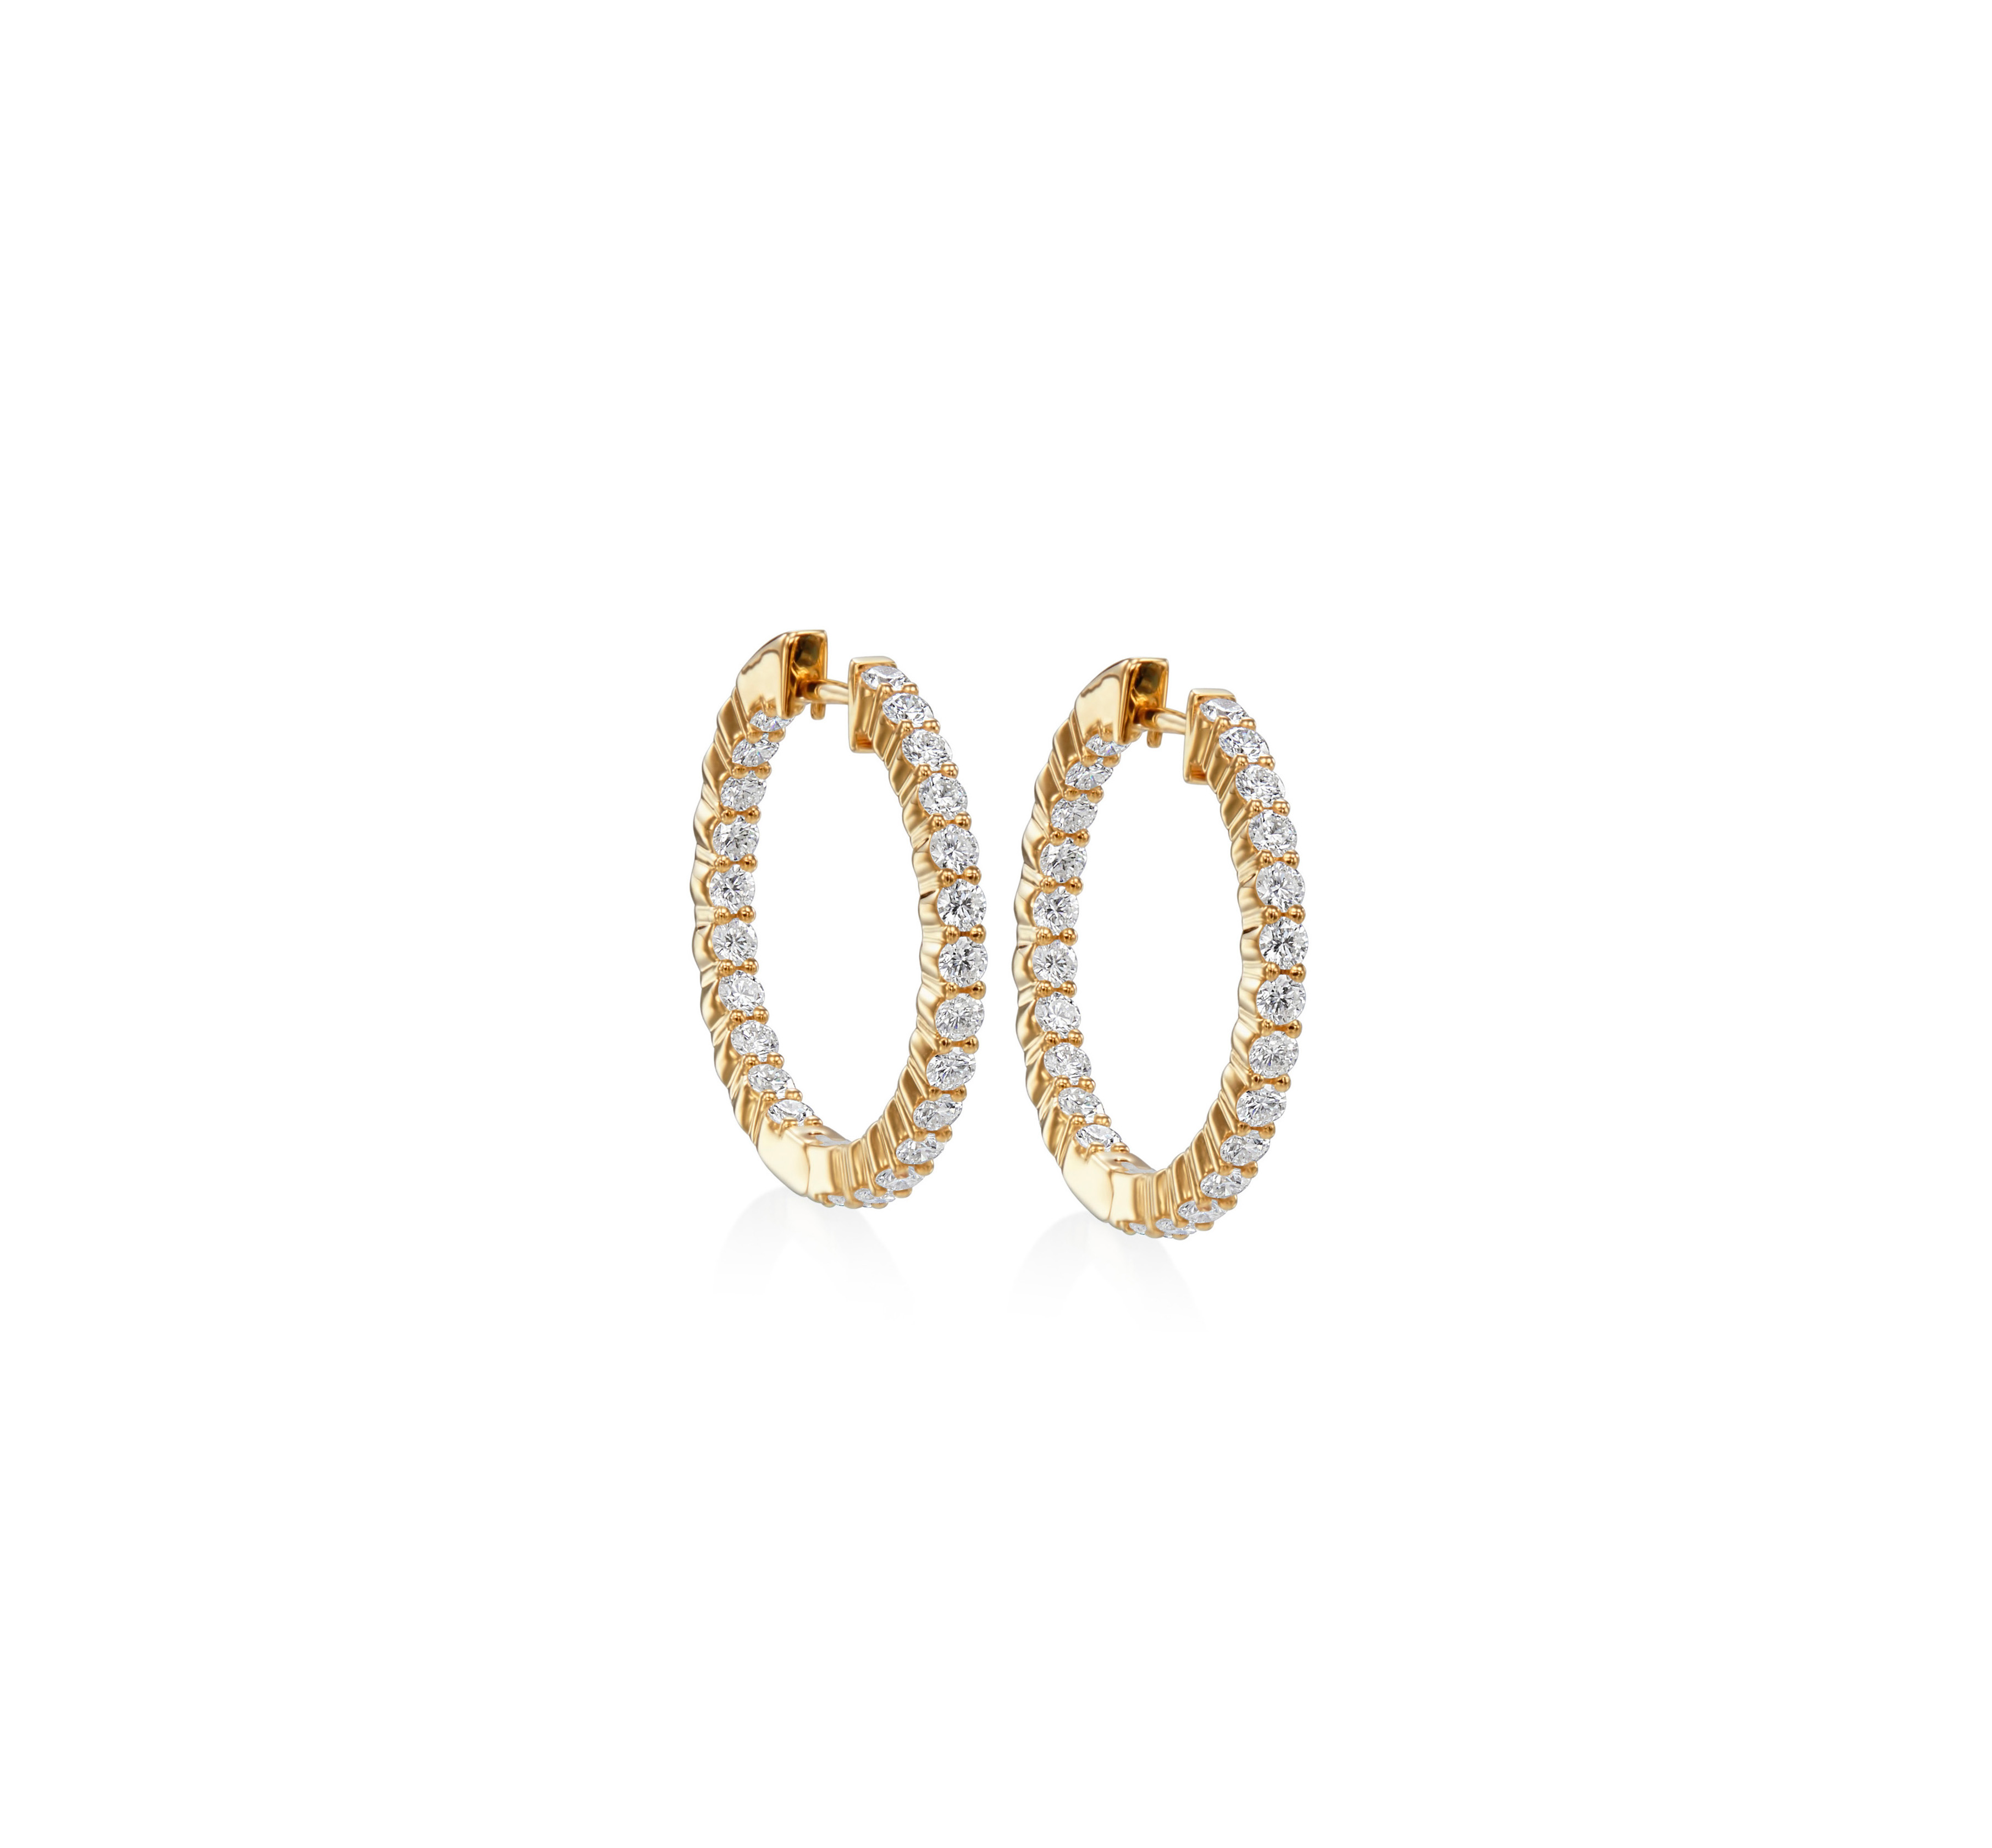 Audrey14k Yellow Gold Hoop Earrings in White Diamond